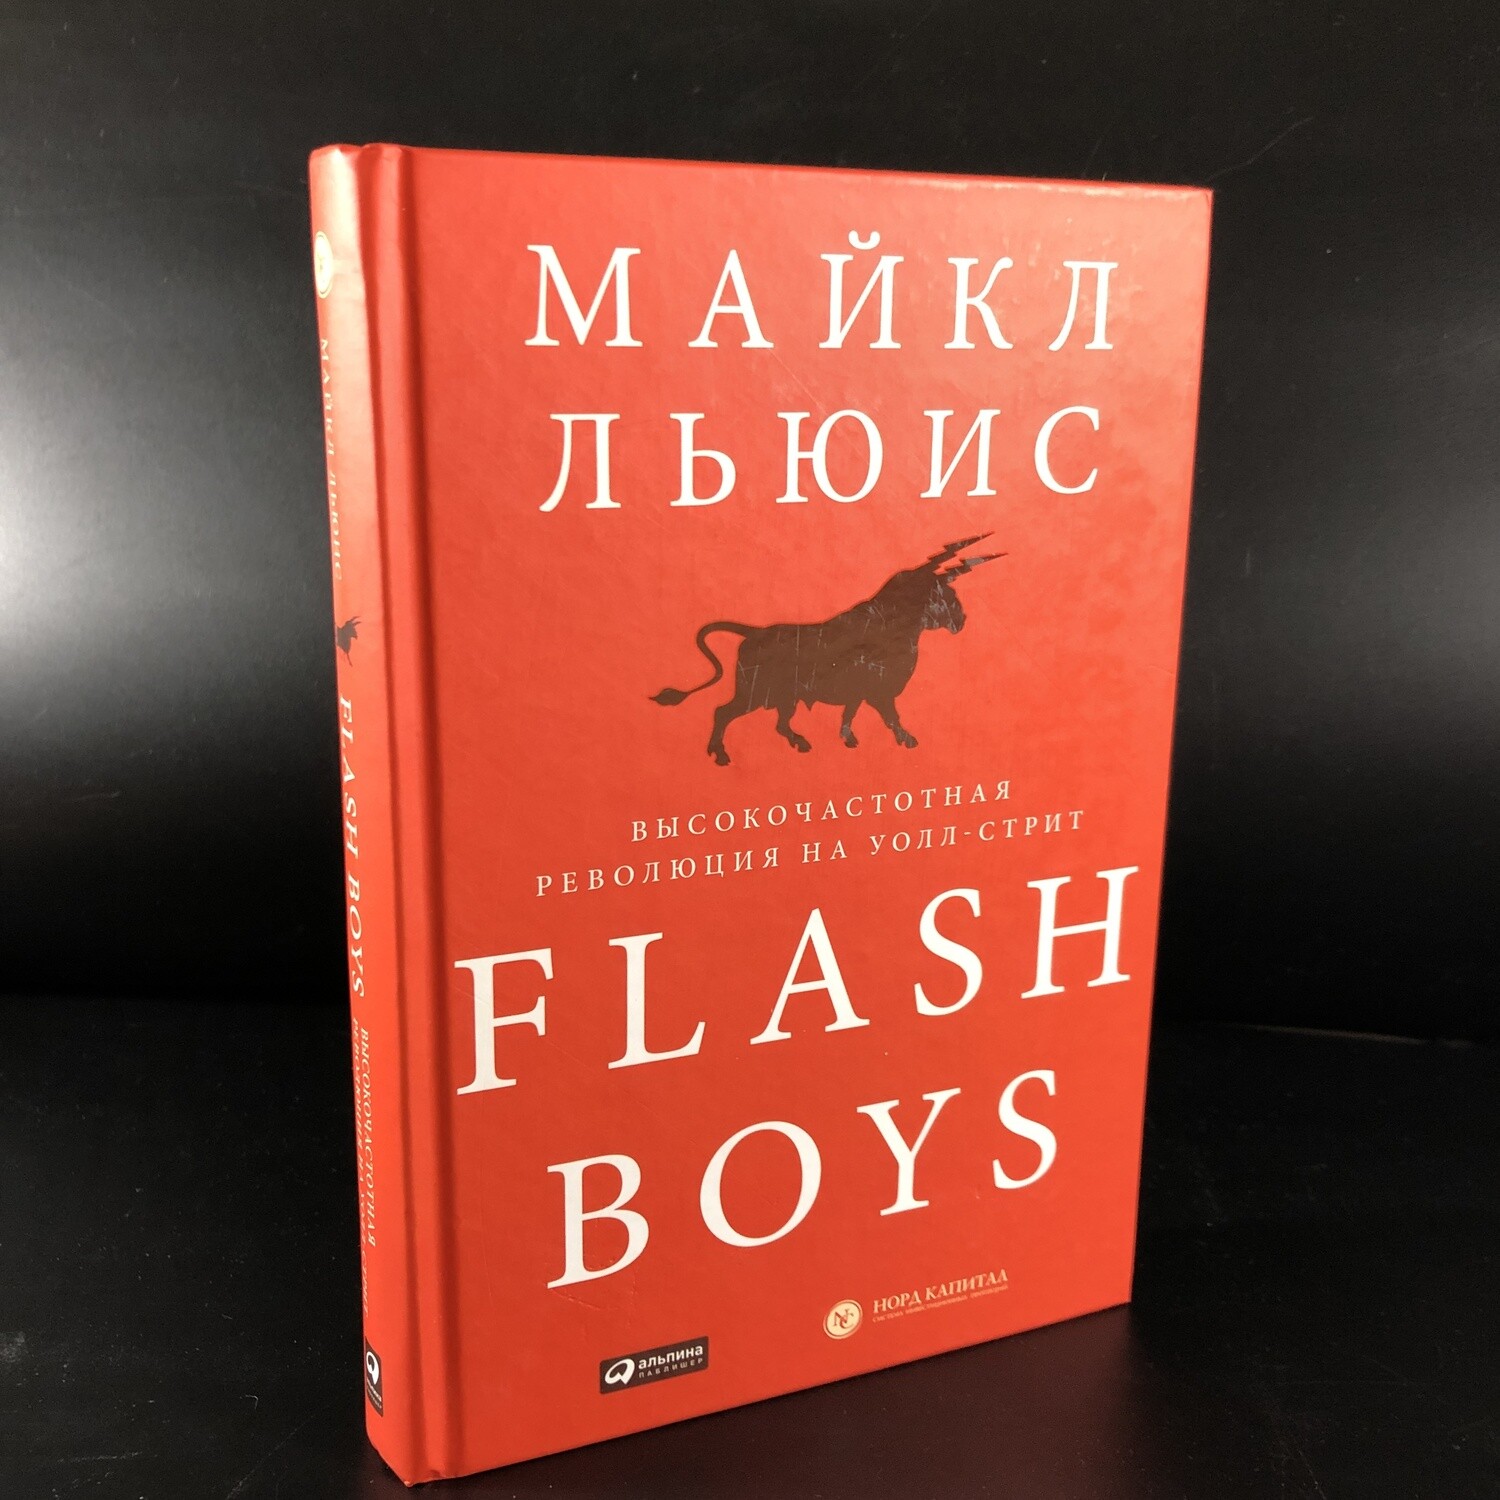 Flash Boys. Майкл Льюис. Москва, 2015 г.